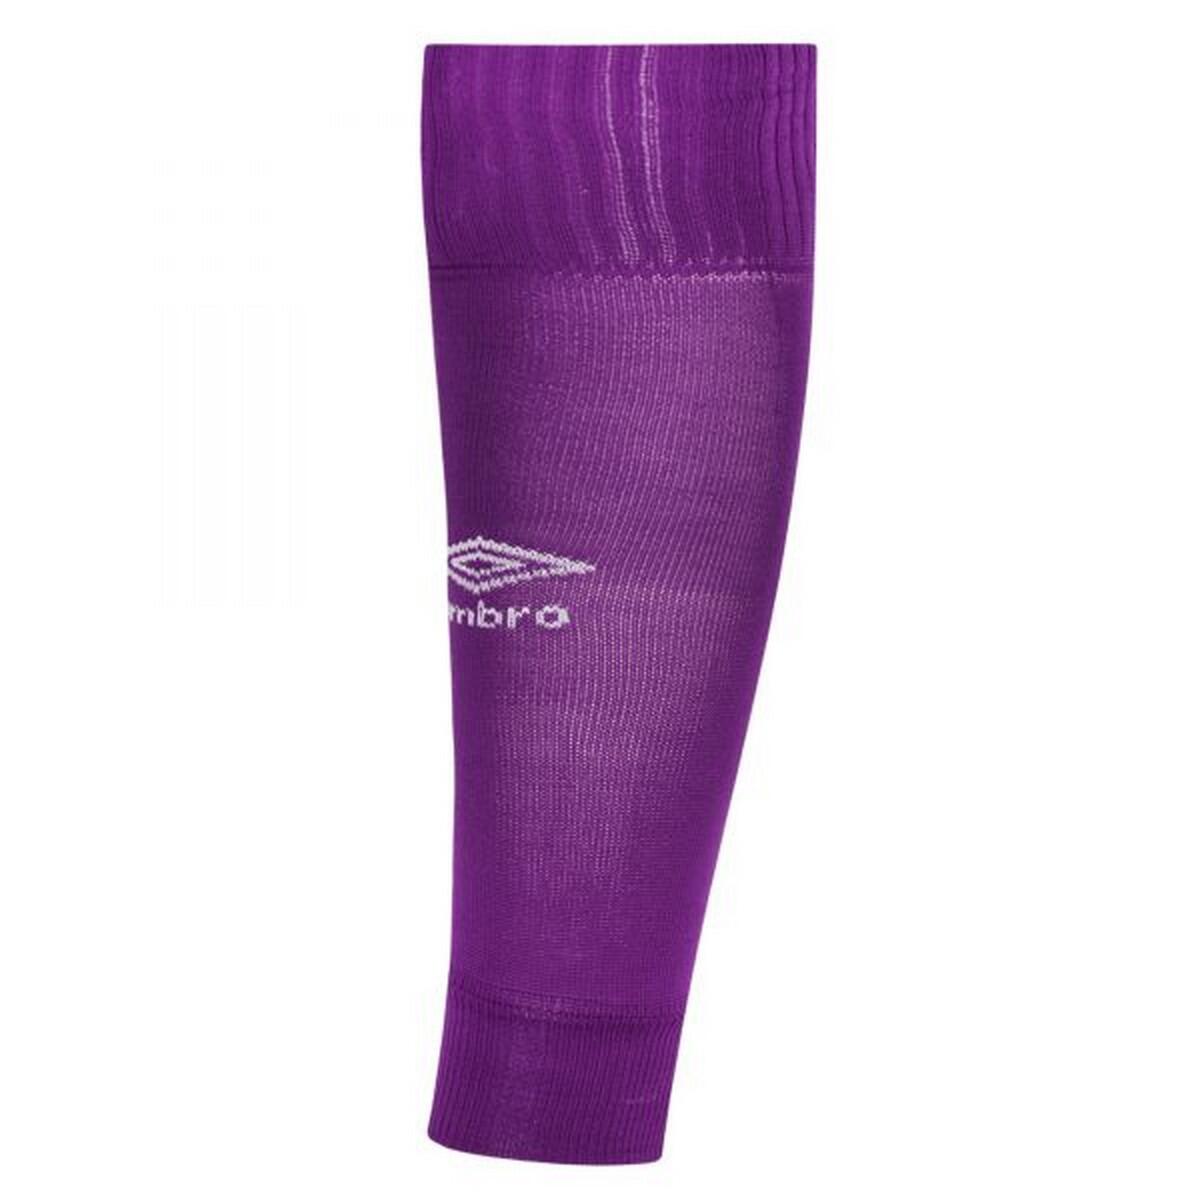 UMBRO Boys Leg Sleeves (Purple Cactus/White)